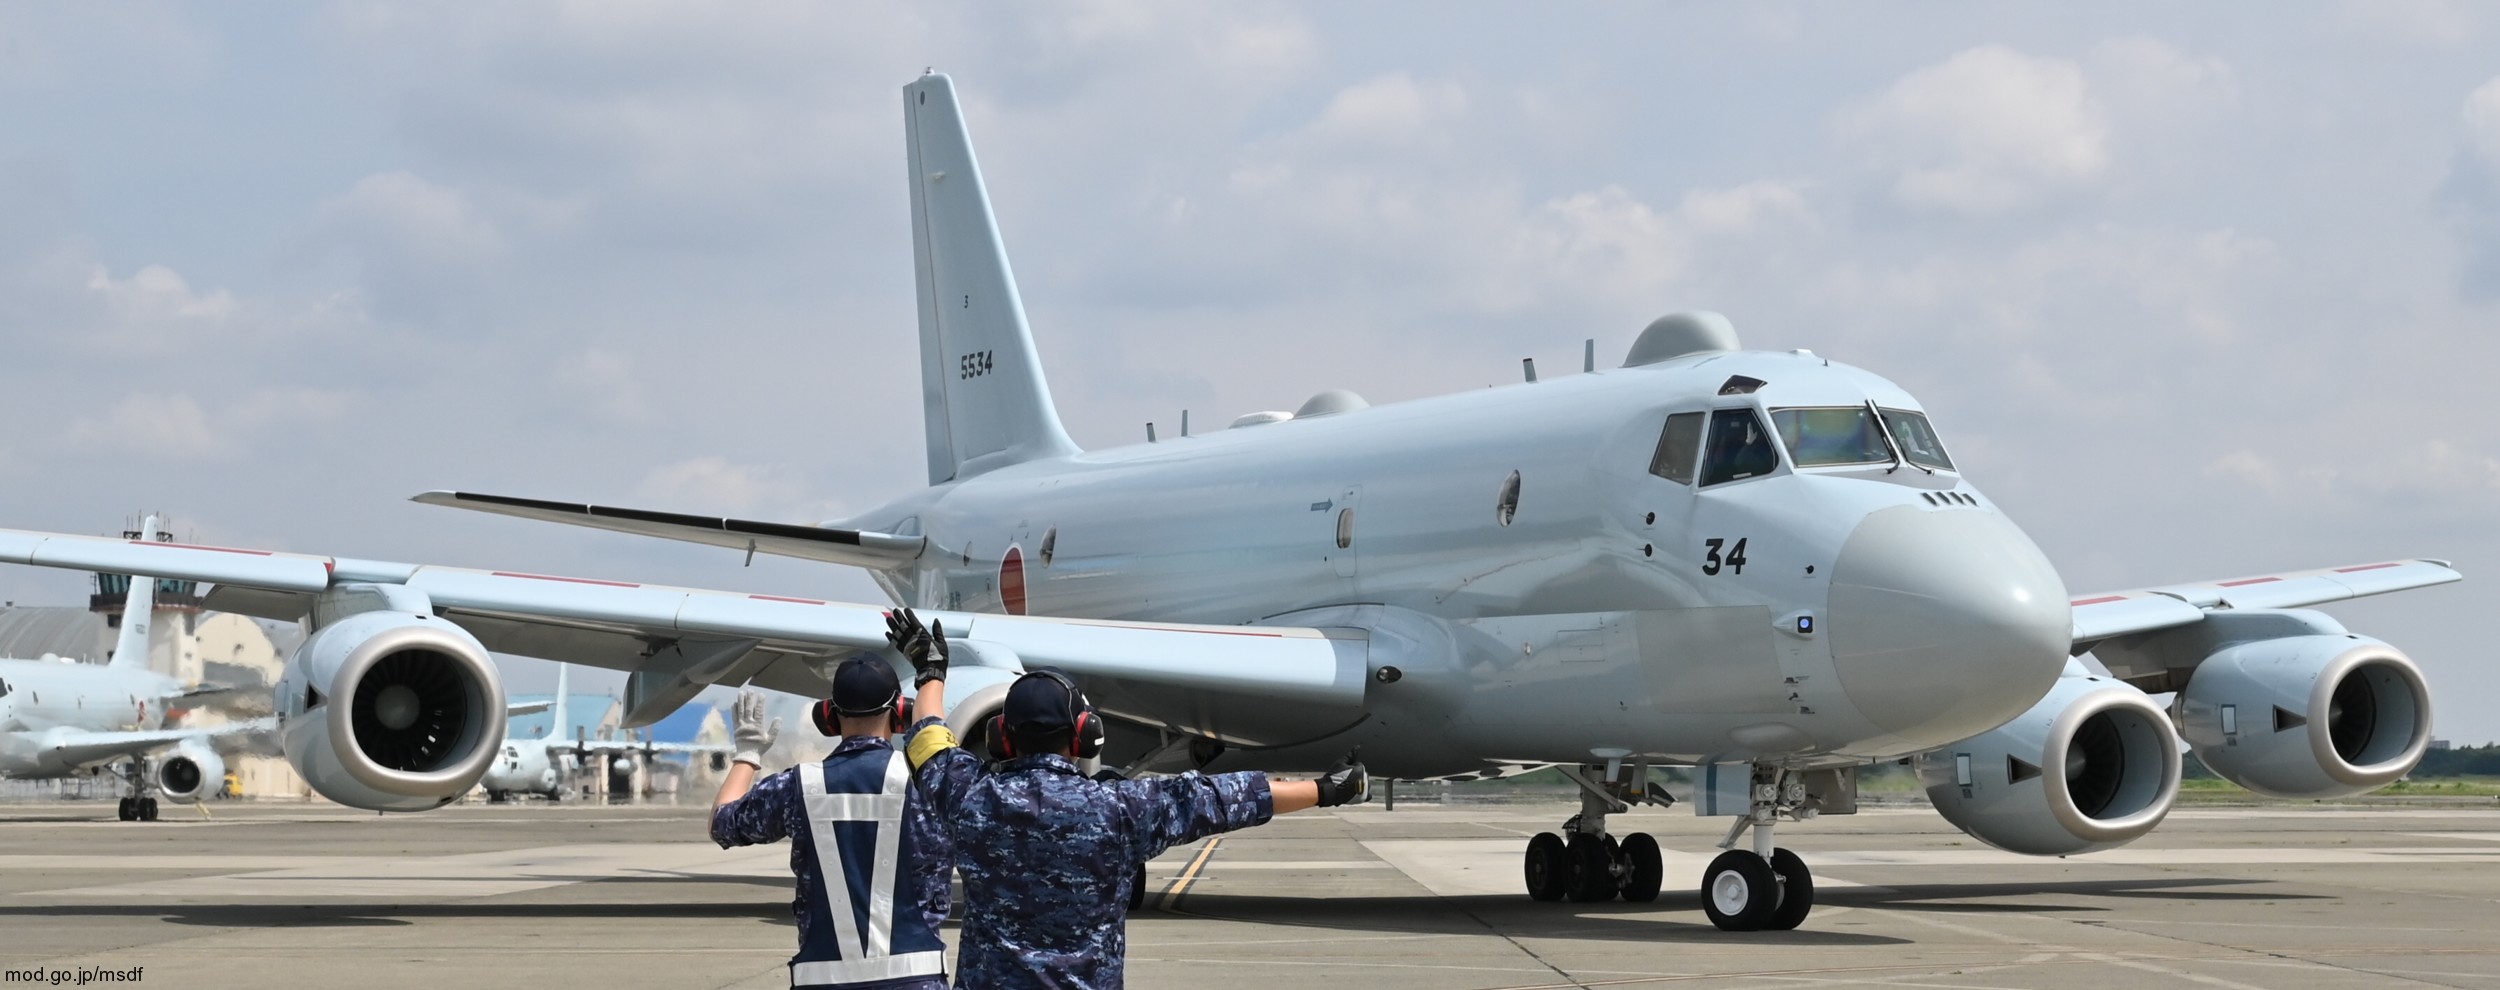 kawasaki p-1 patrol aircraft mpa japan maritime self defense force jmsdf 5534 03